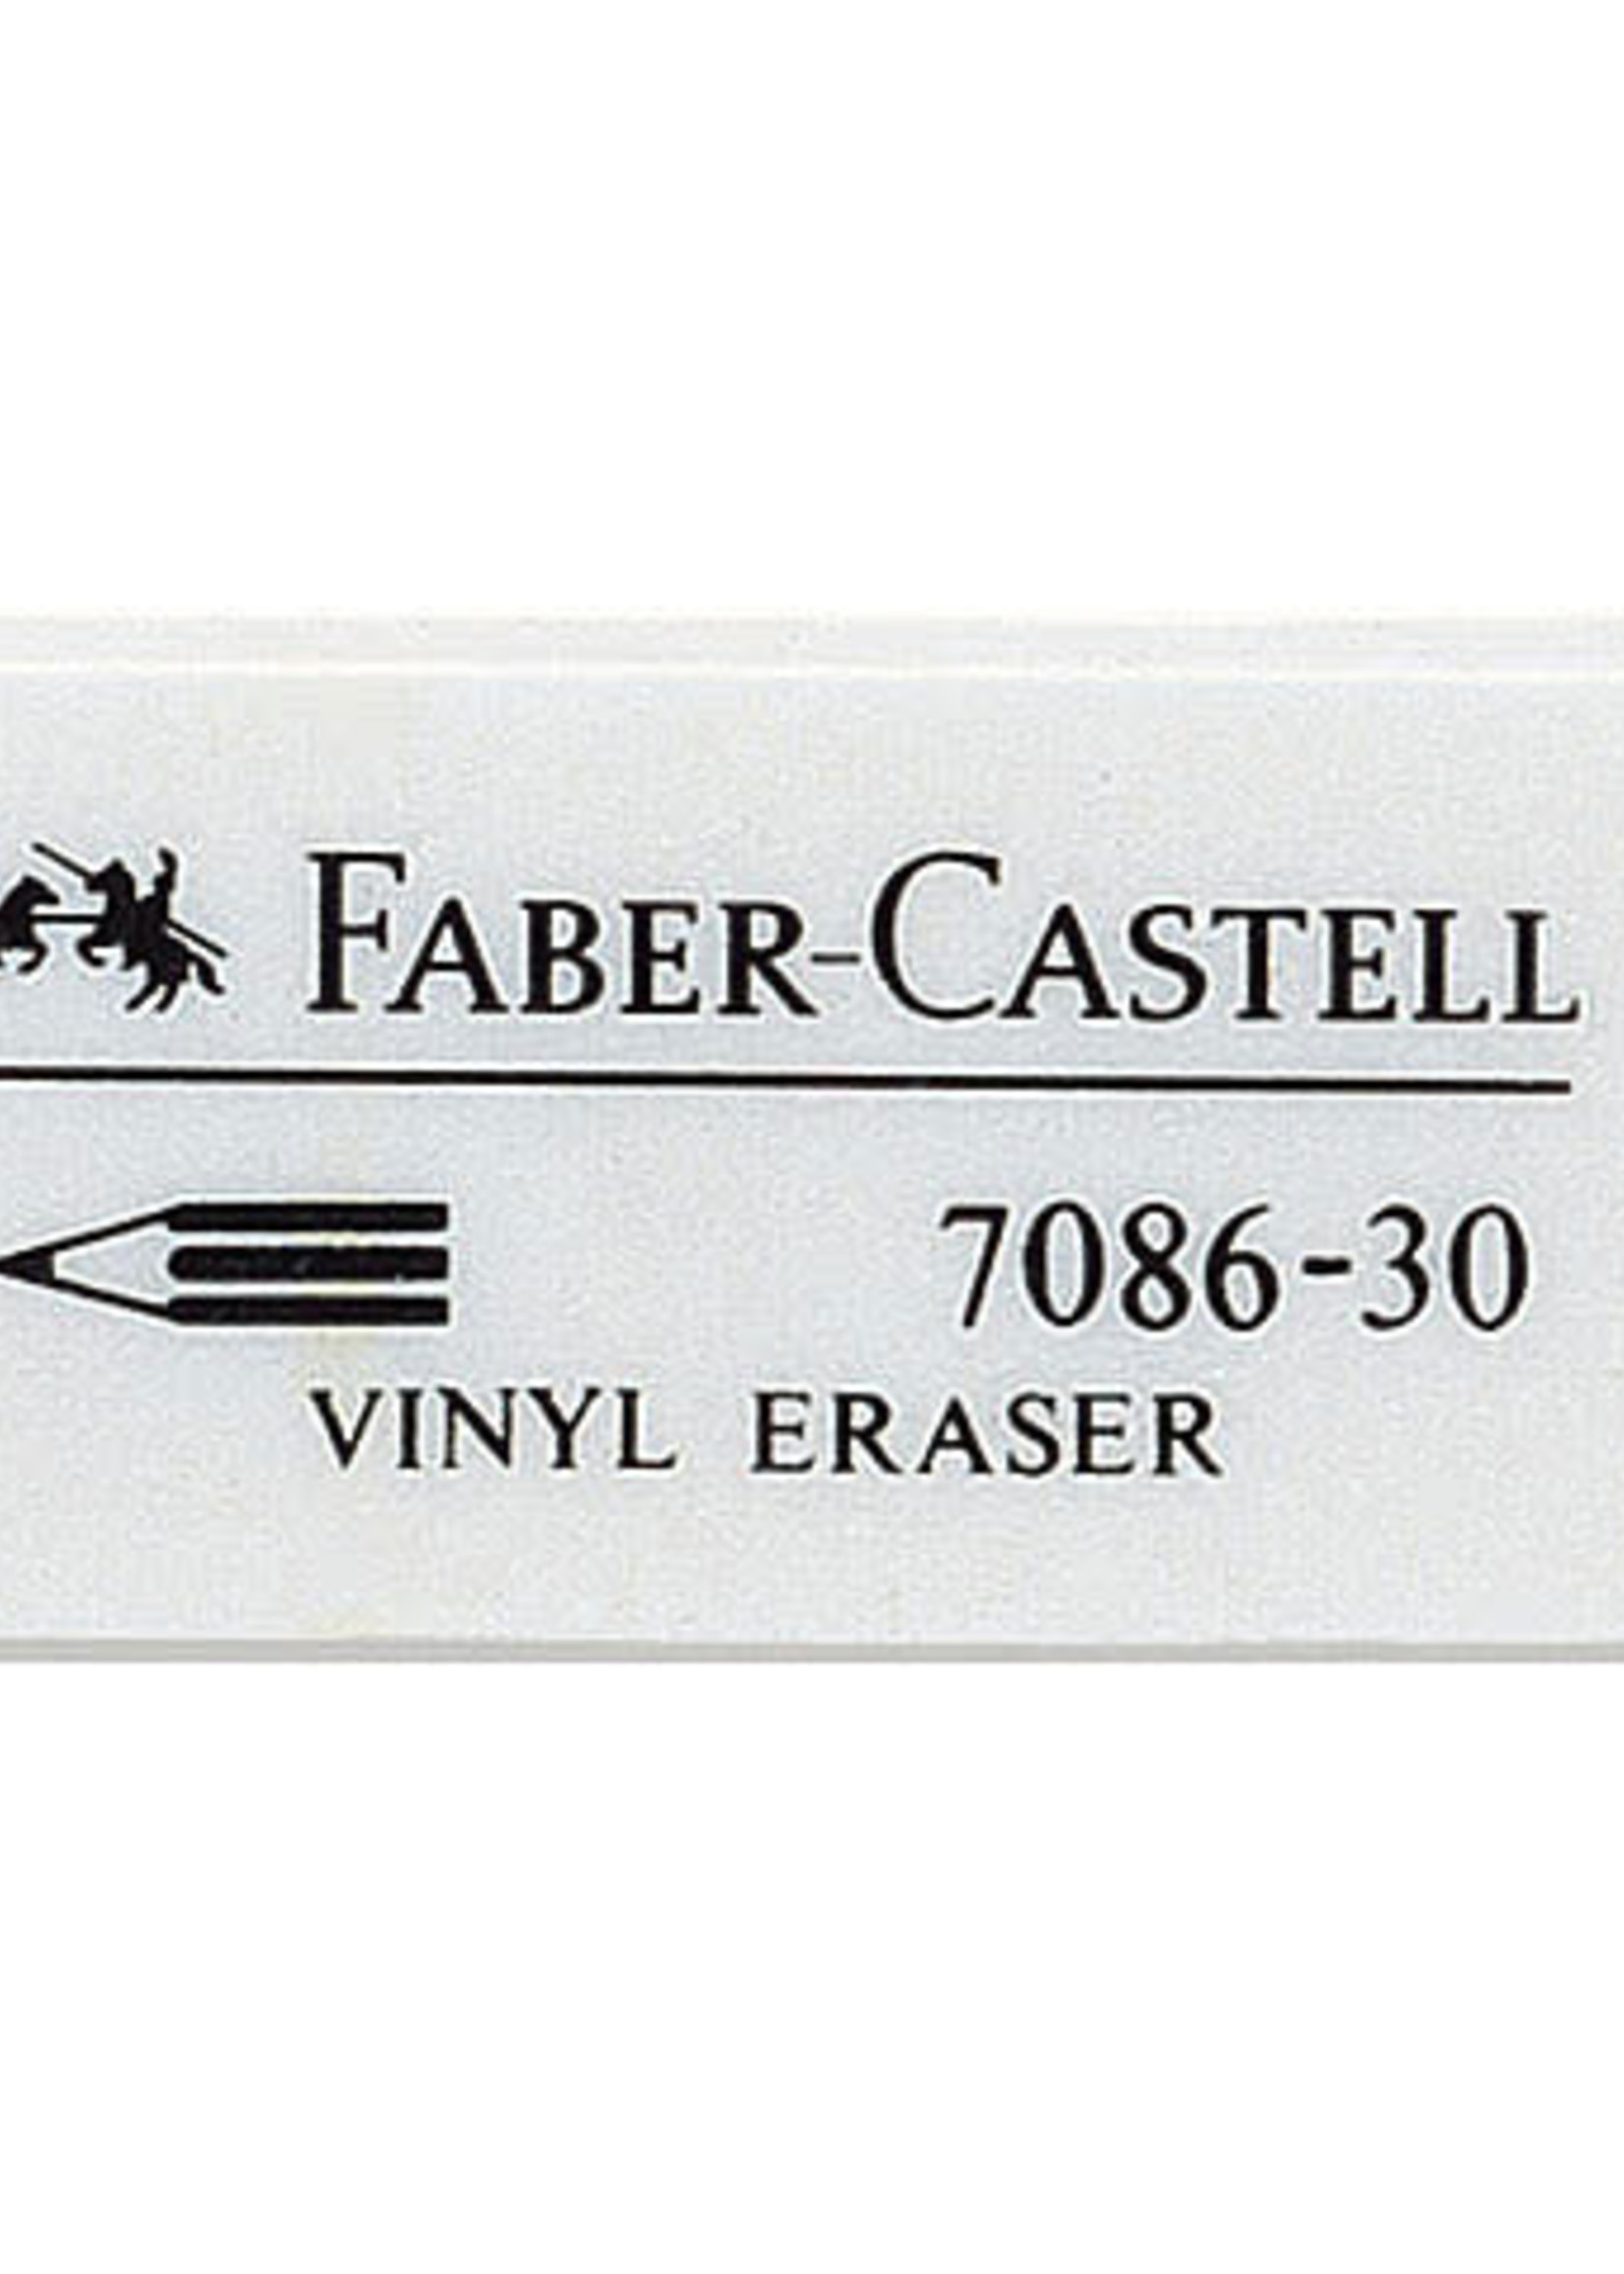 FABER-CASTELL USA WHITE PVC FREE ERASER 188730